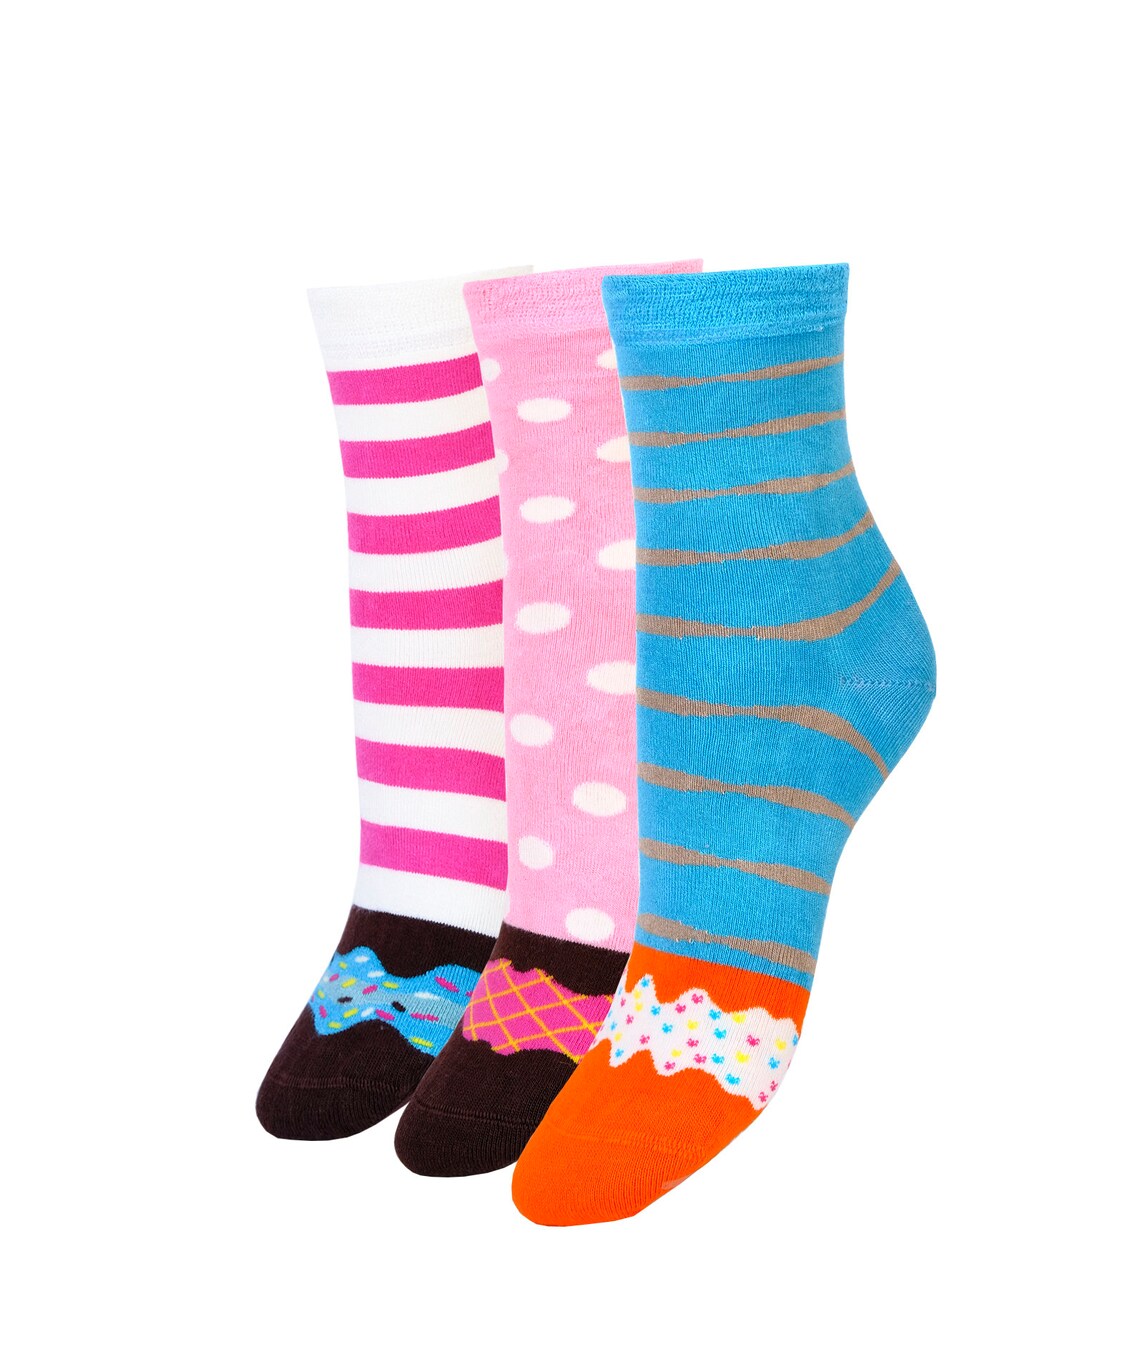 Cotton Donut Unisex Socks Gift Box Set of 3 Pair Stripes Polka Dots Pink Blue